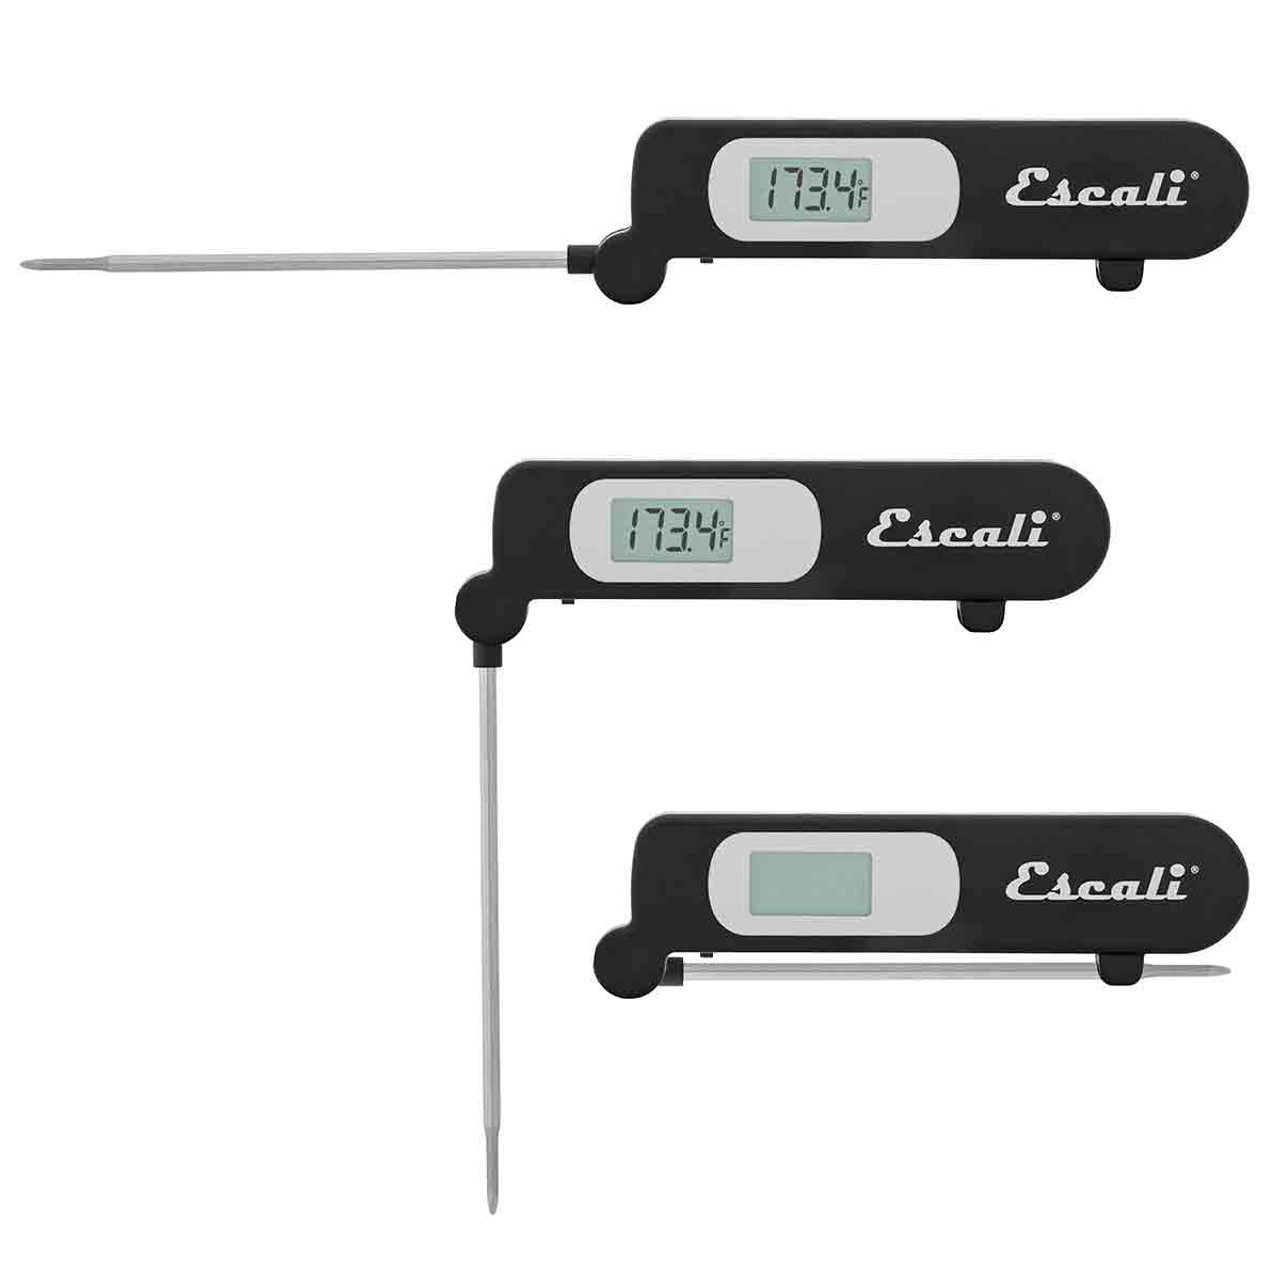 Digital Pocket Probe Thermometer – Meat N' Bone